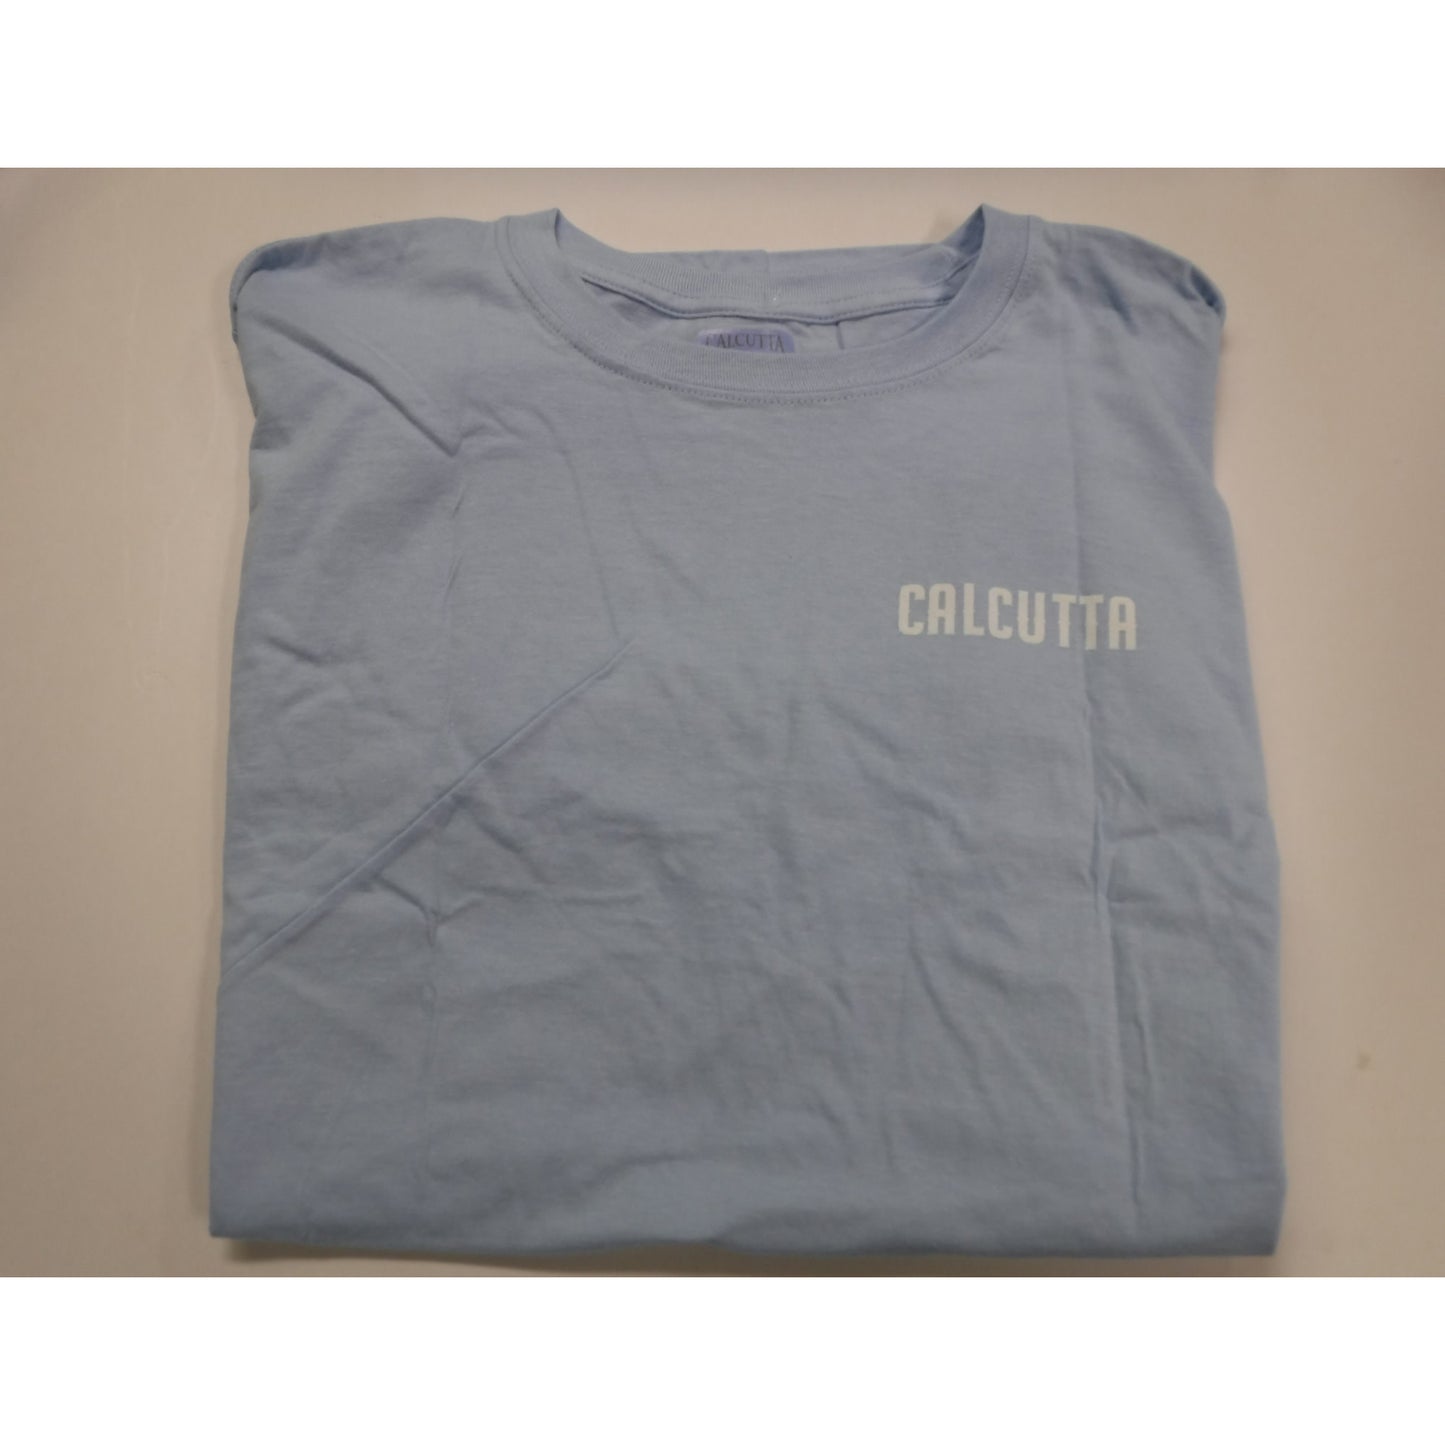 New Authentic Calcutta Short Sleeve Shirt Light Blue/ Back Marlin Release